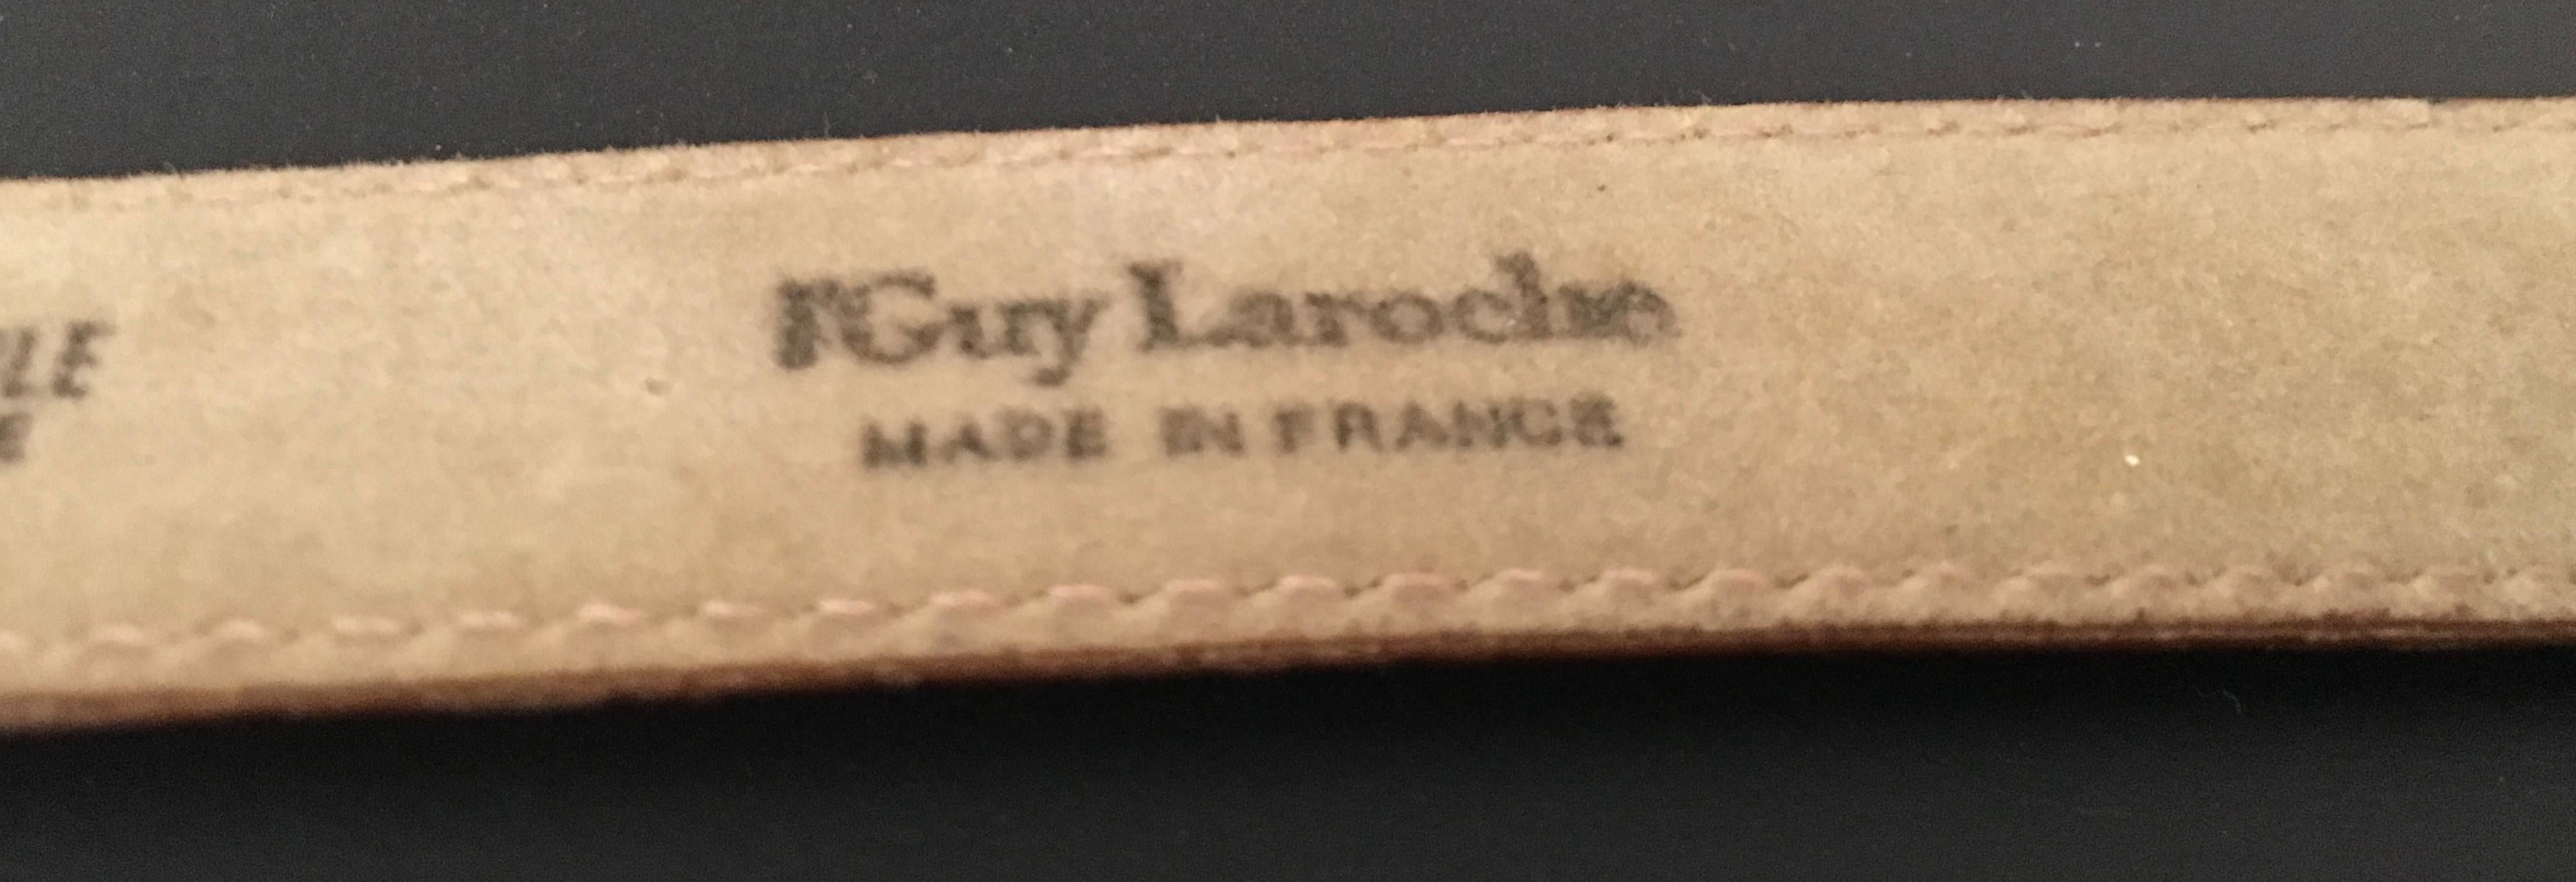 Brown Guy Laroche Tan Leather Belt with Logo Buckle 